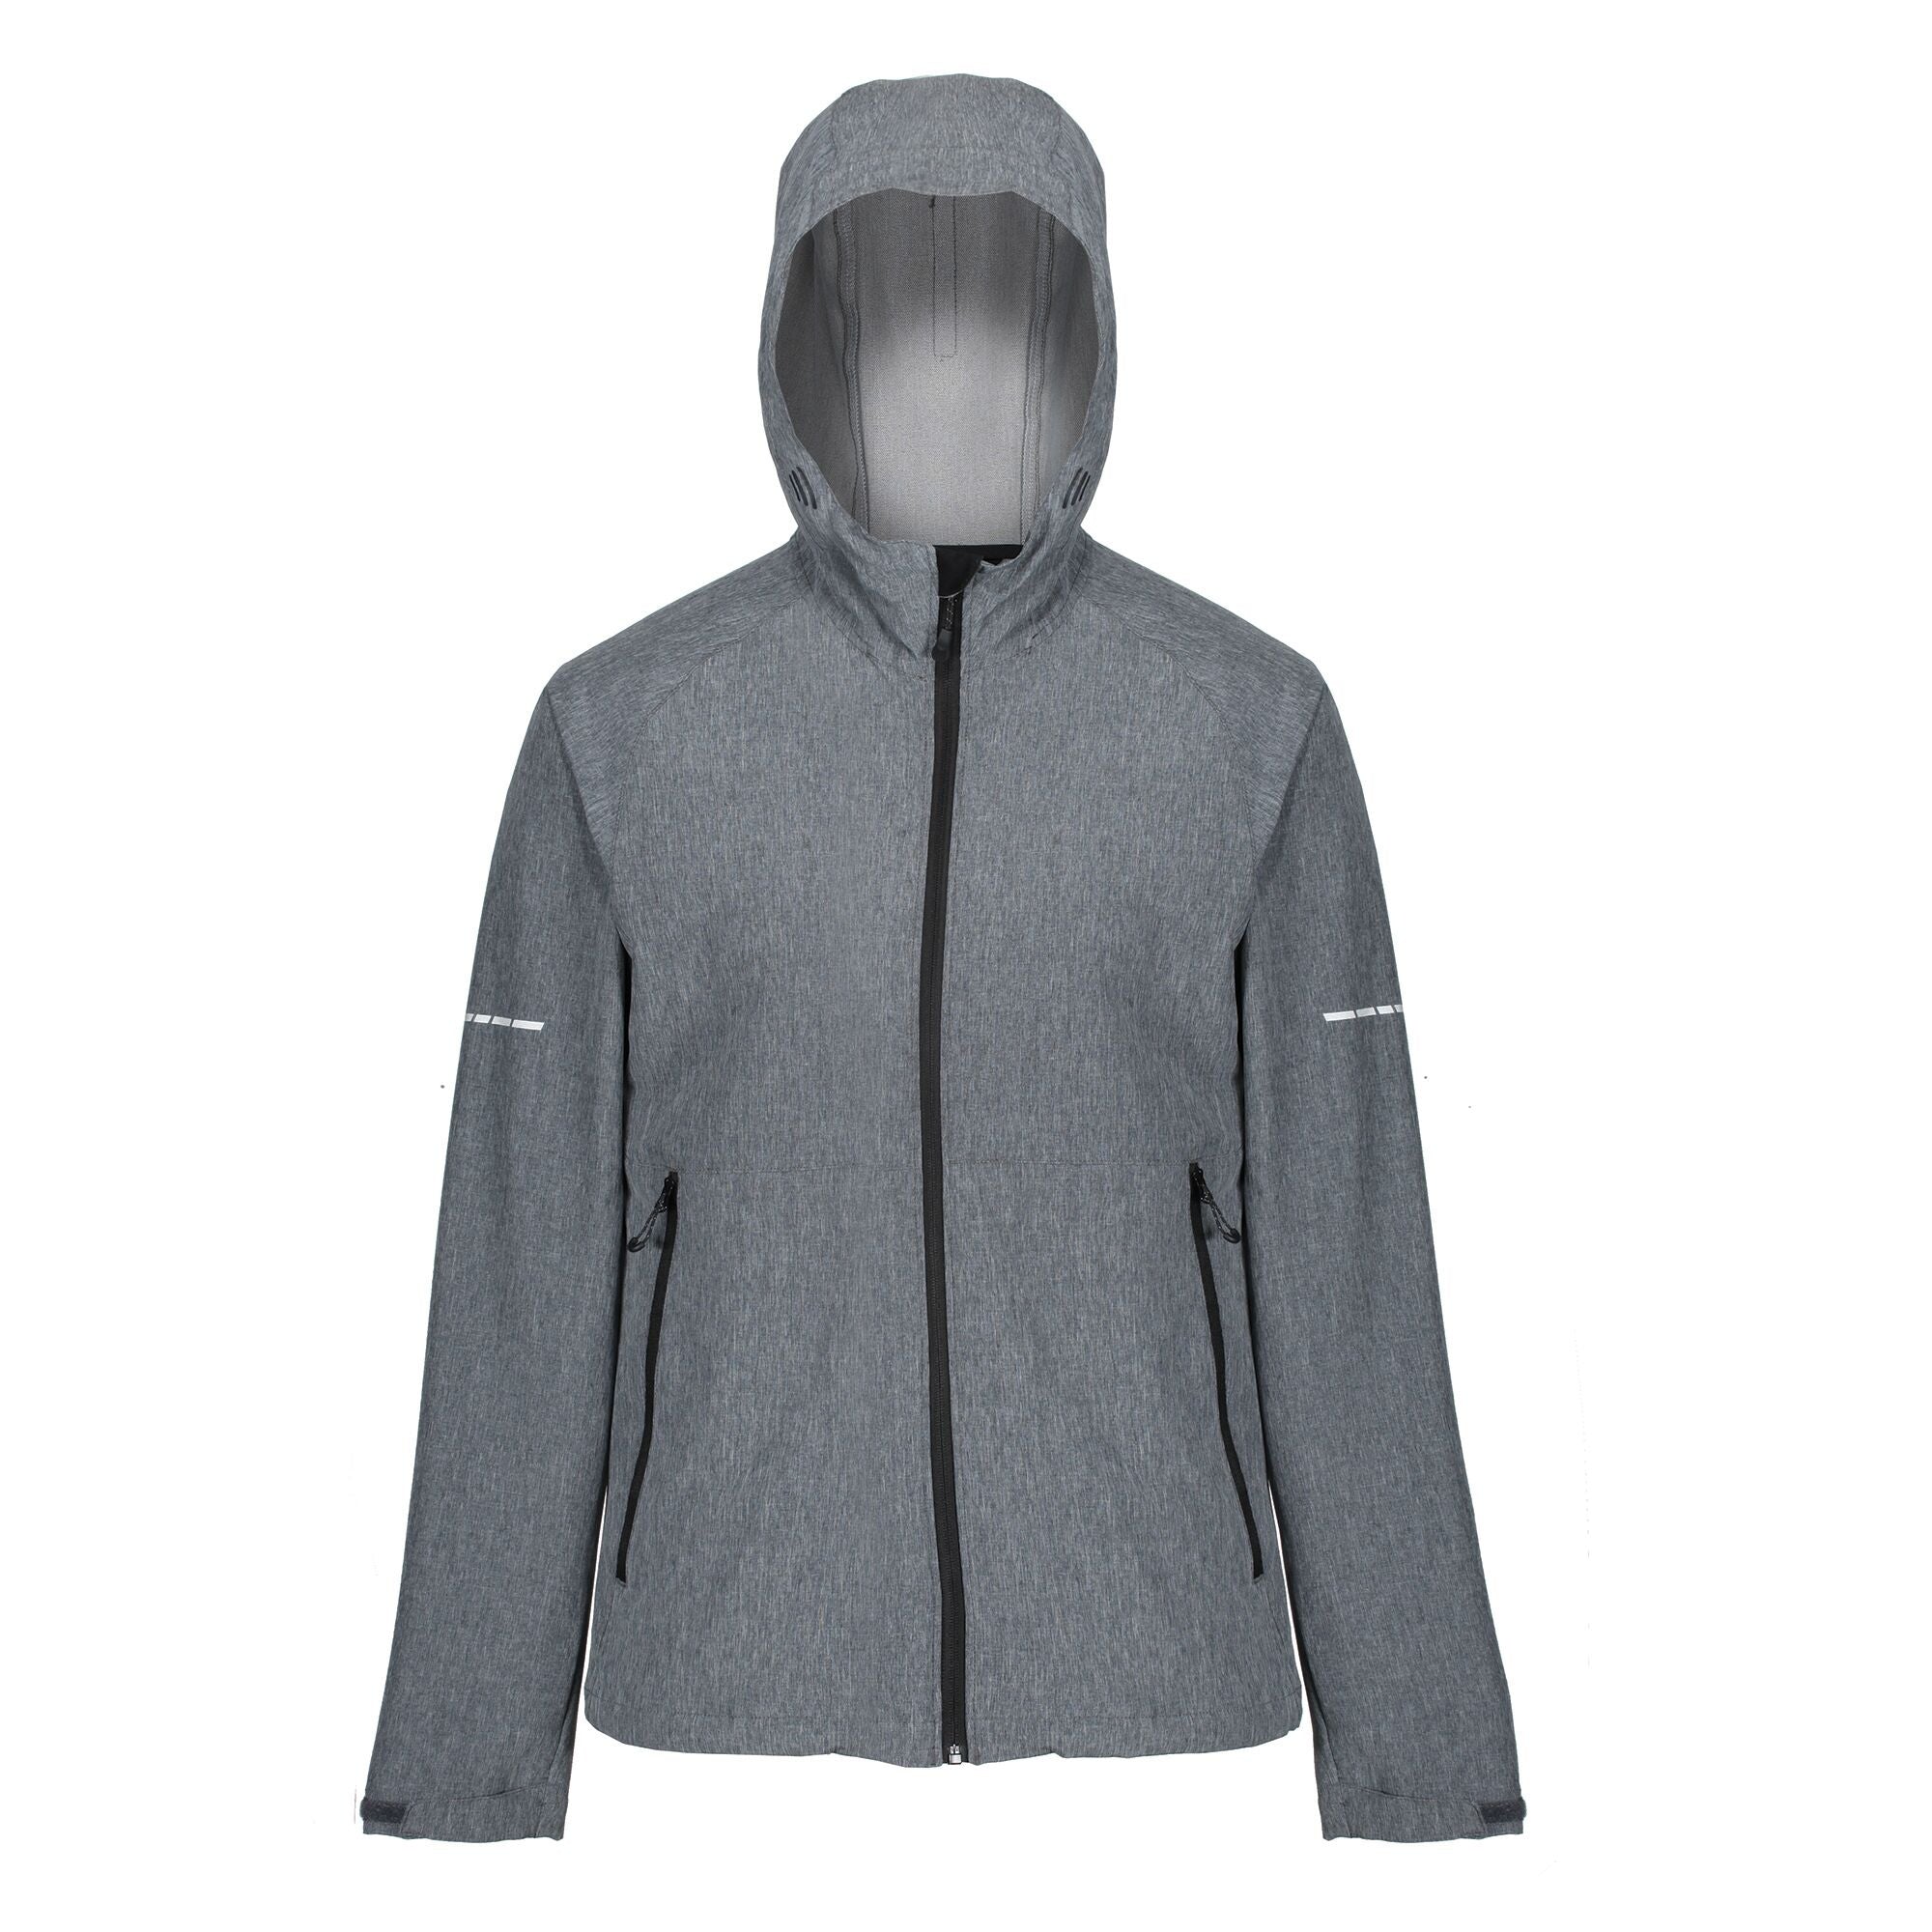 Regatta Prolite Eco-Stretch Jacket - Seal Grey/Marl